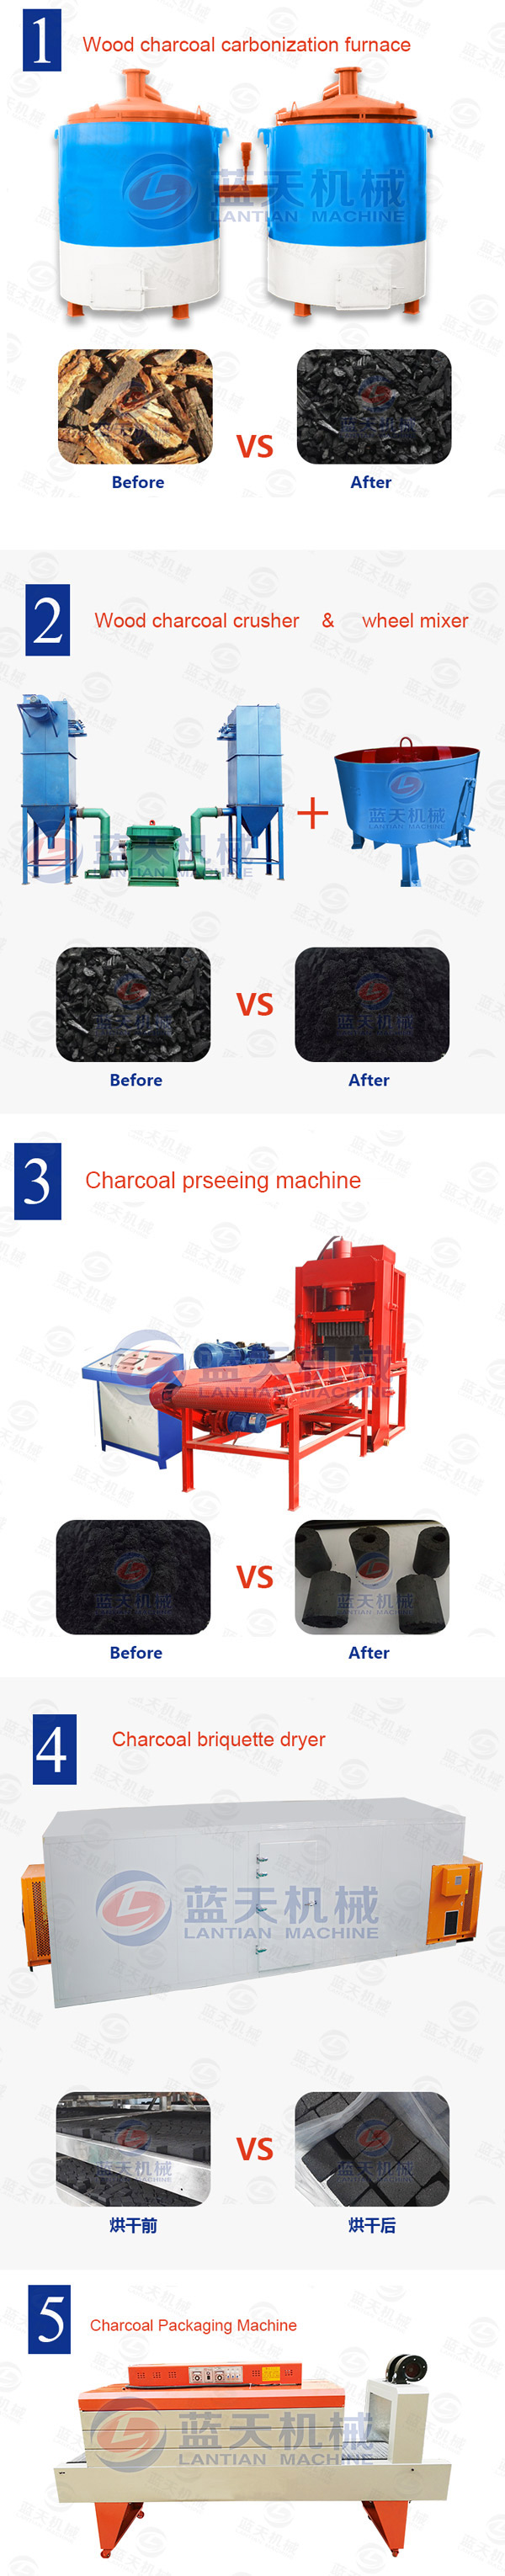 Charcoal Briquette Packing Machine